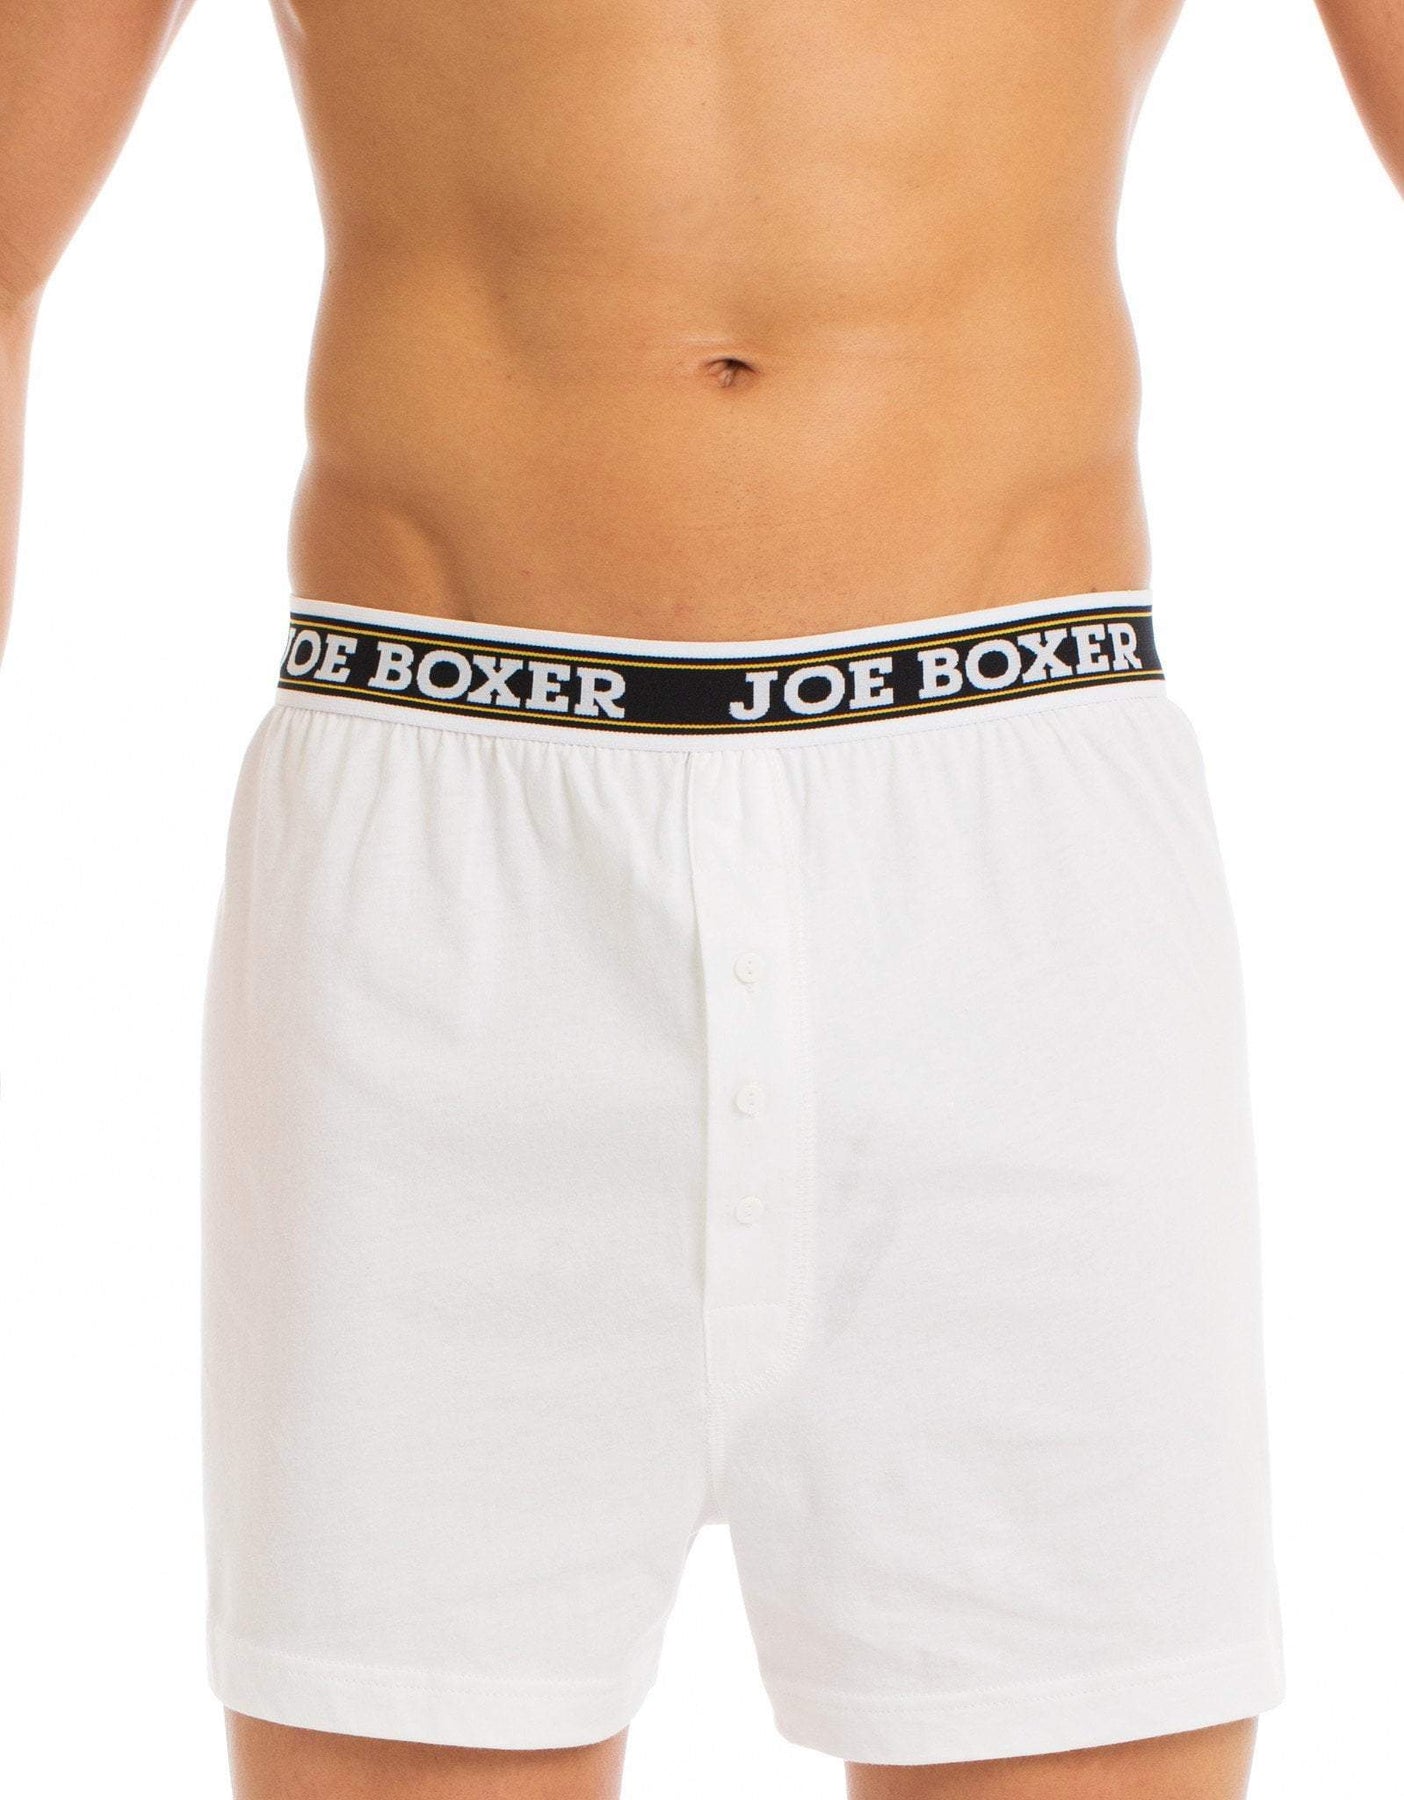 Buy Elsie Joss Men's Trunk Underwear - Premium Cotton Sports Boxer Brief  with Anatomical Pouch, Breathable Underwear for Men, White, Small at